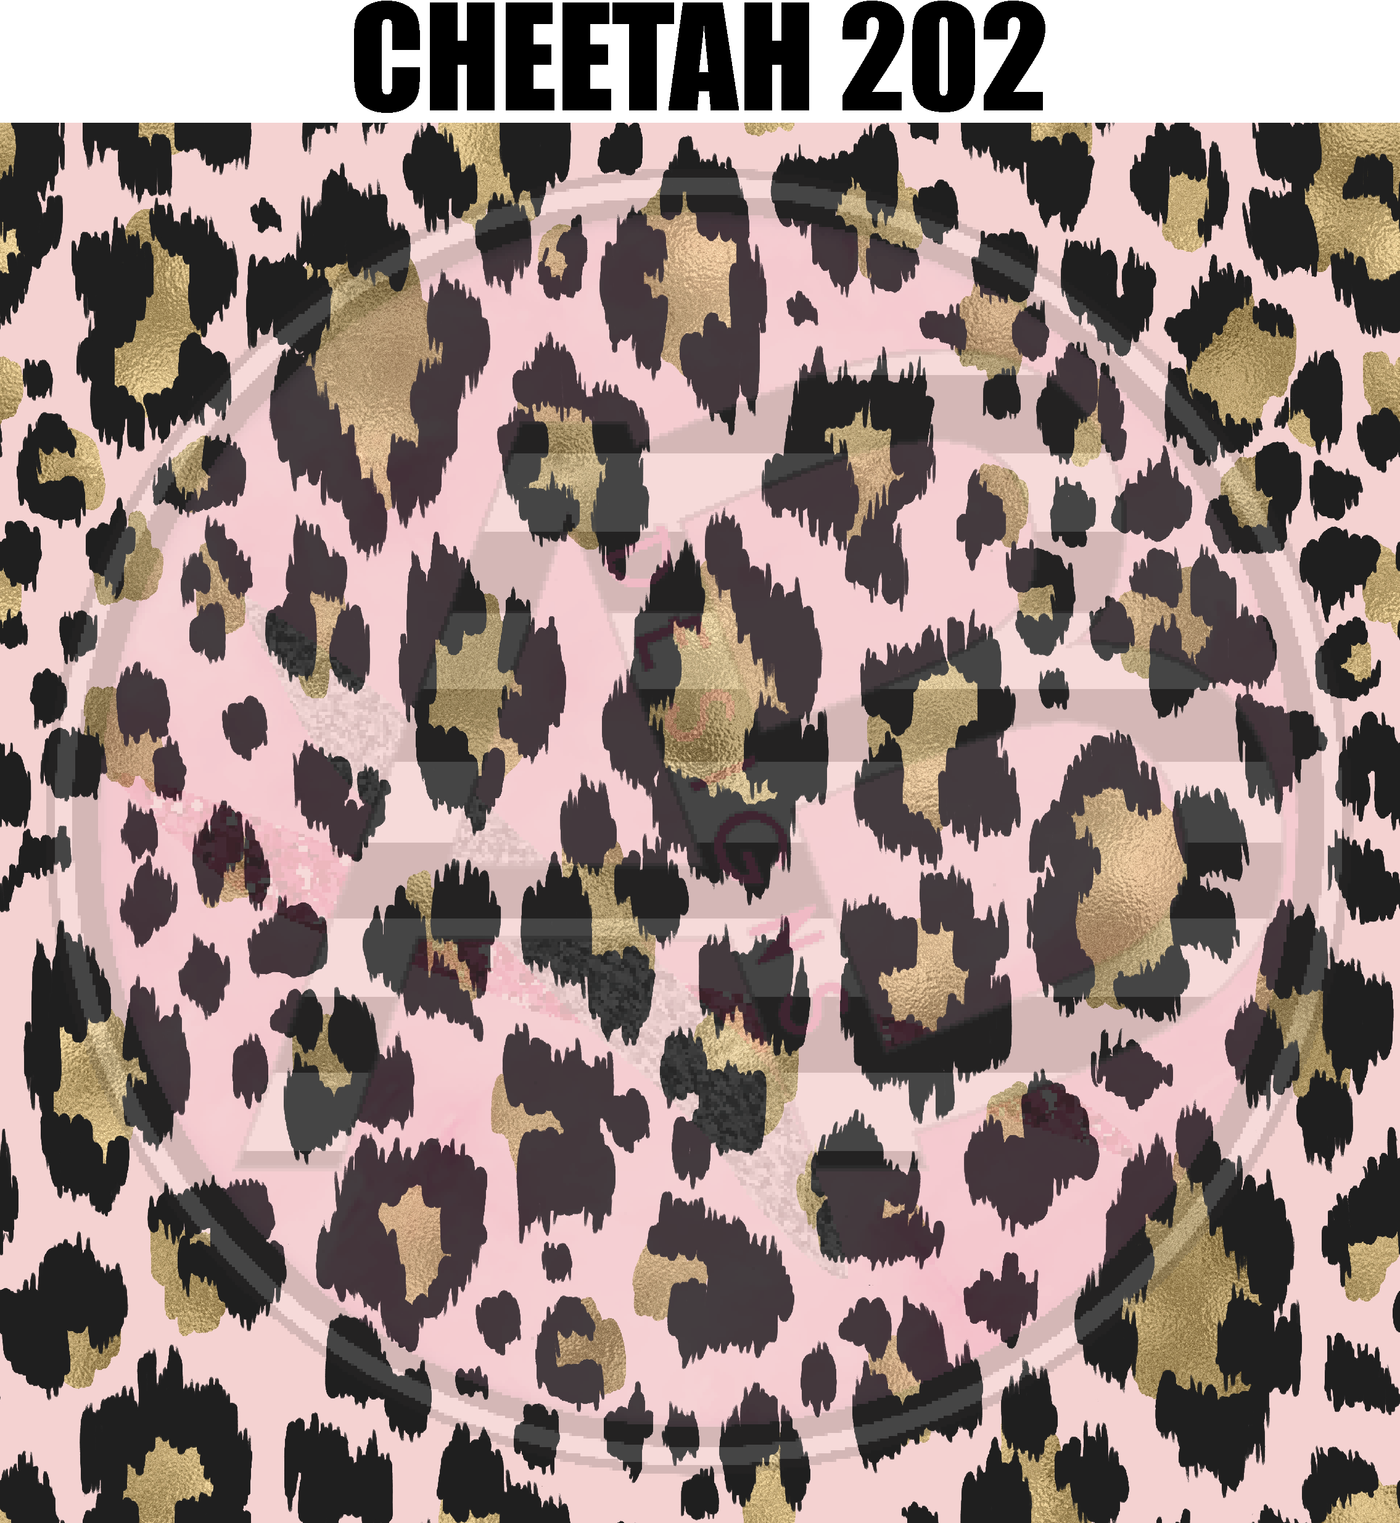 Adhesive Patterned Vinyl - Cheetah 202